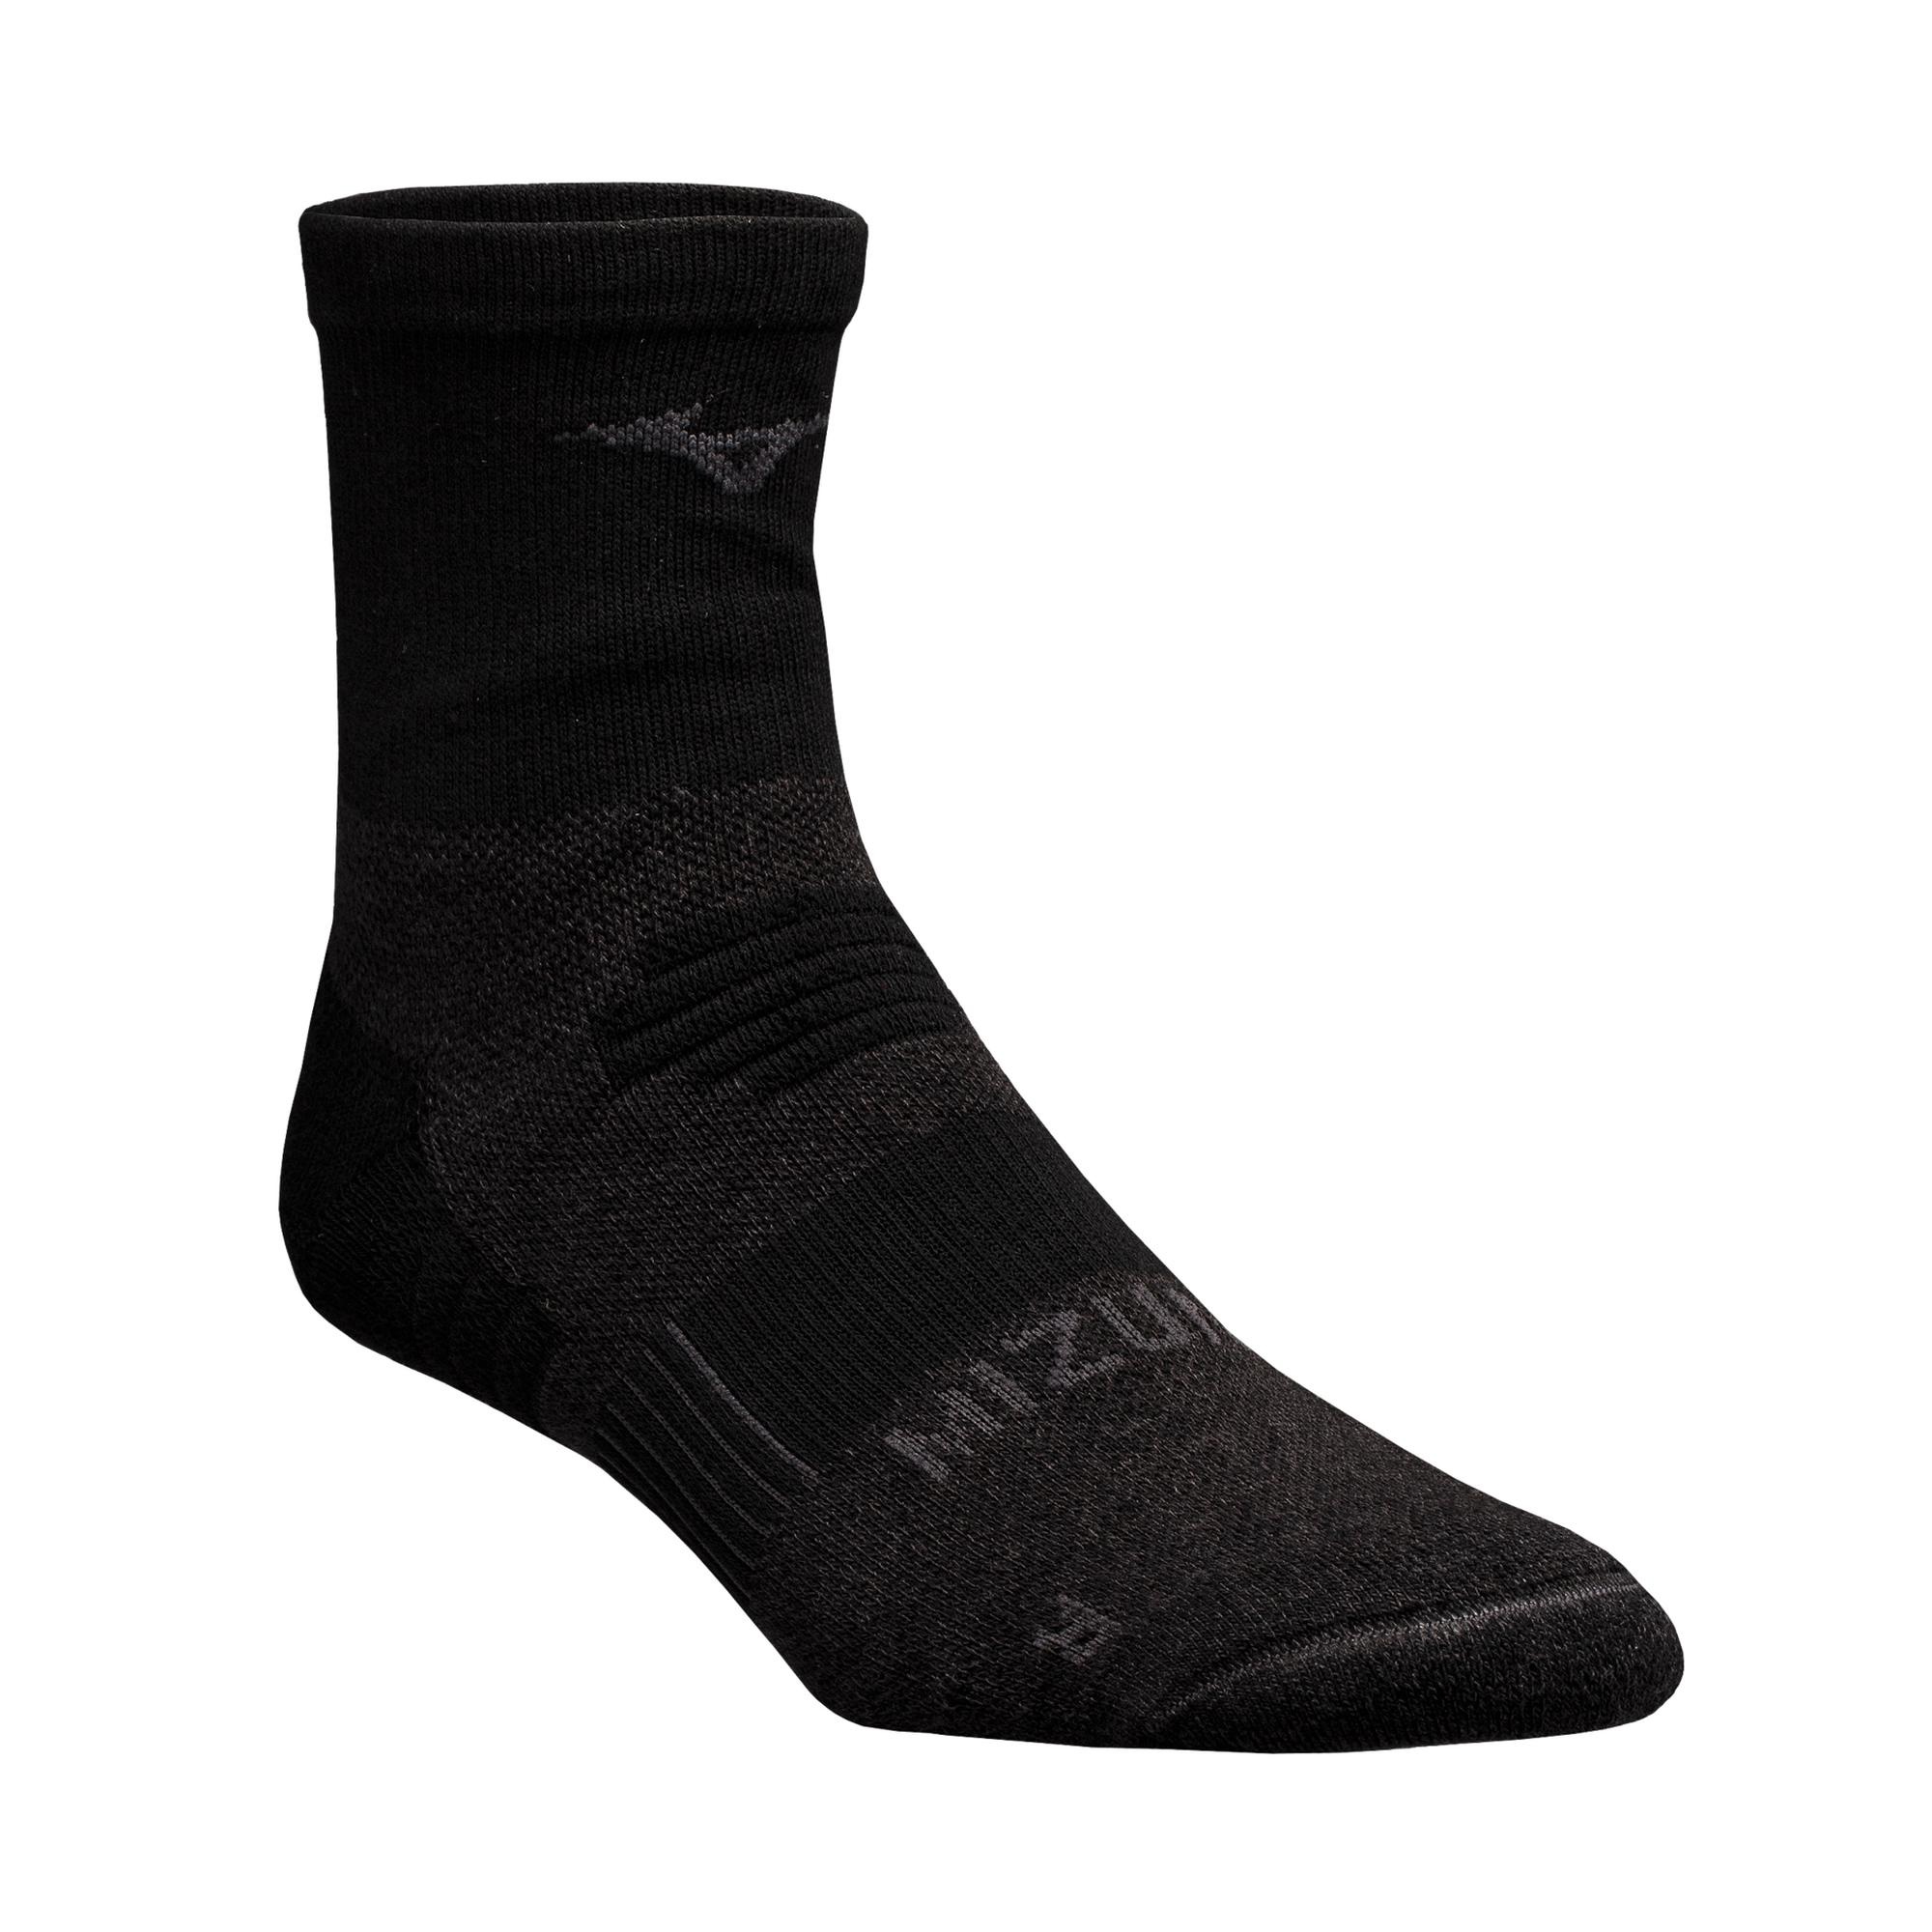 Mizuno Breath Thermo Racer Mid Socks, Black